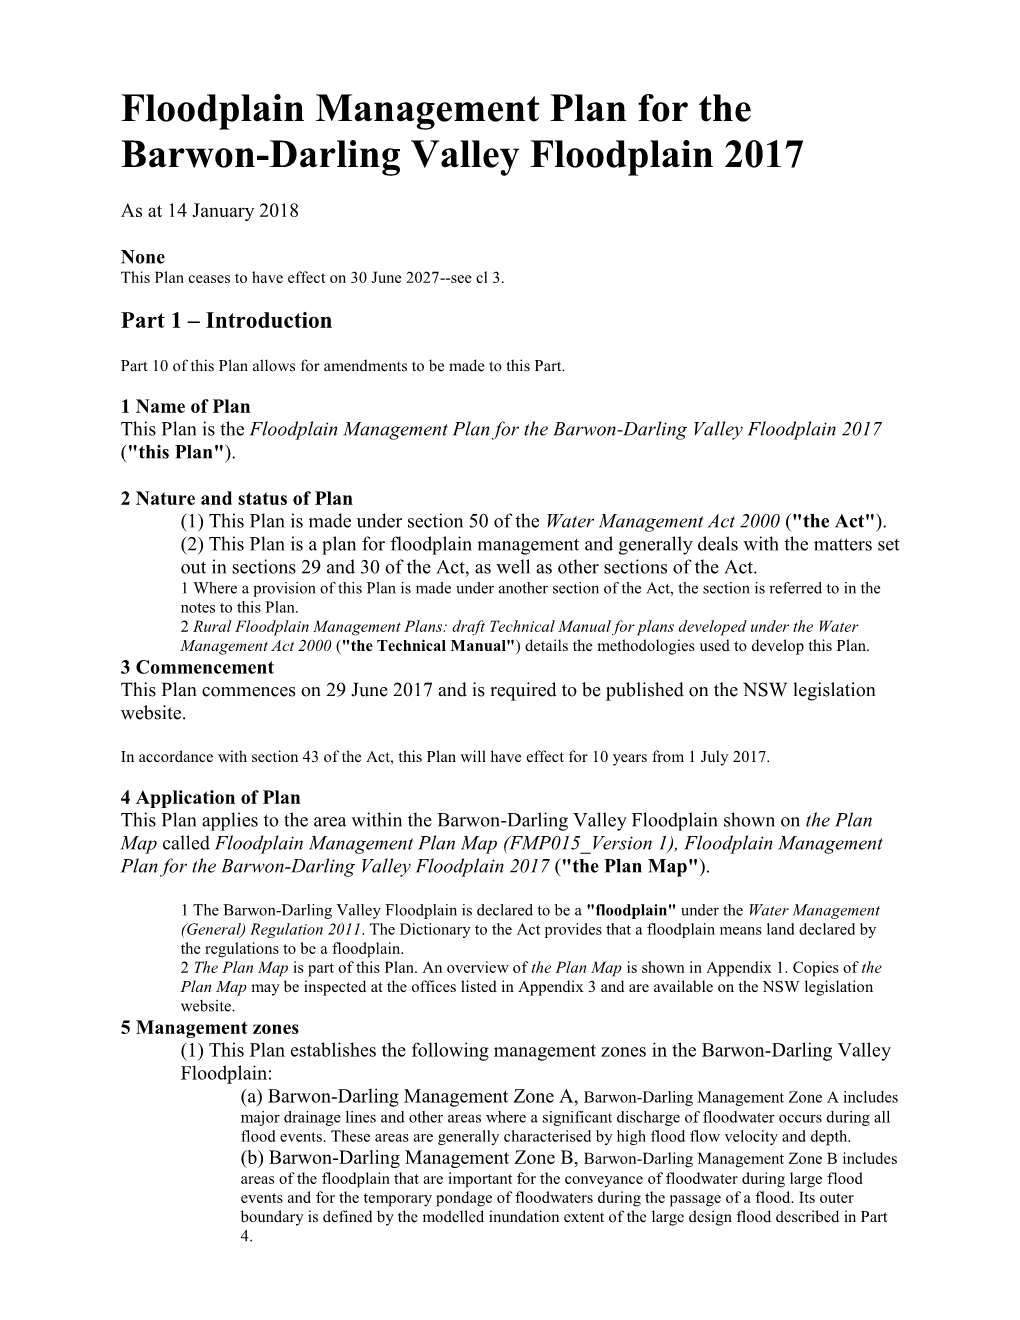 Floodplain Management Plan for the Barwon-Darling Valley Floodplain 2017